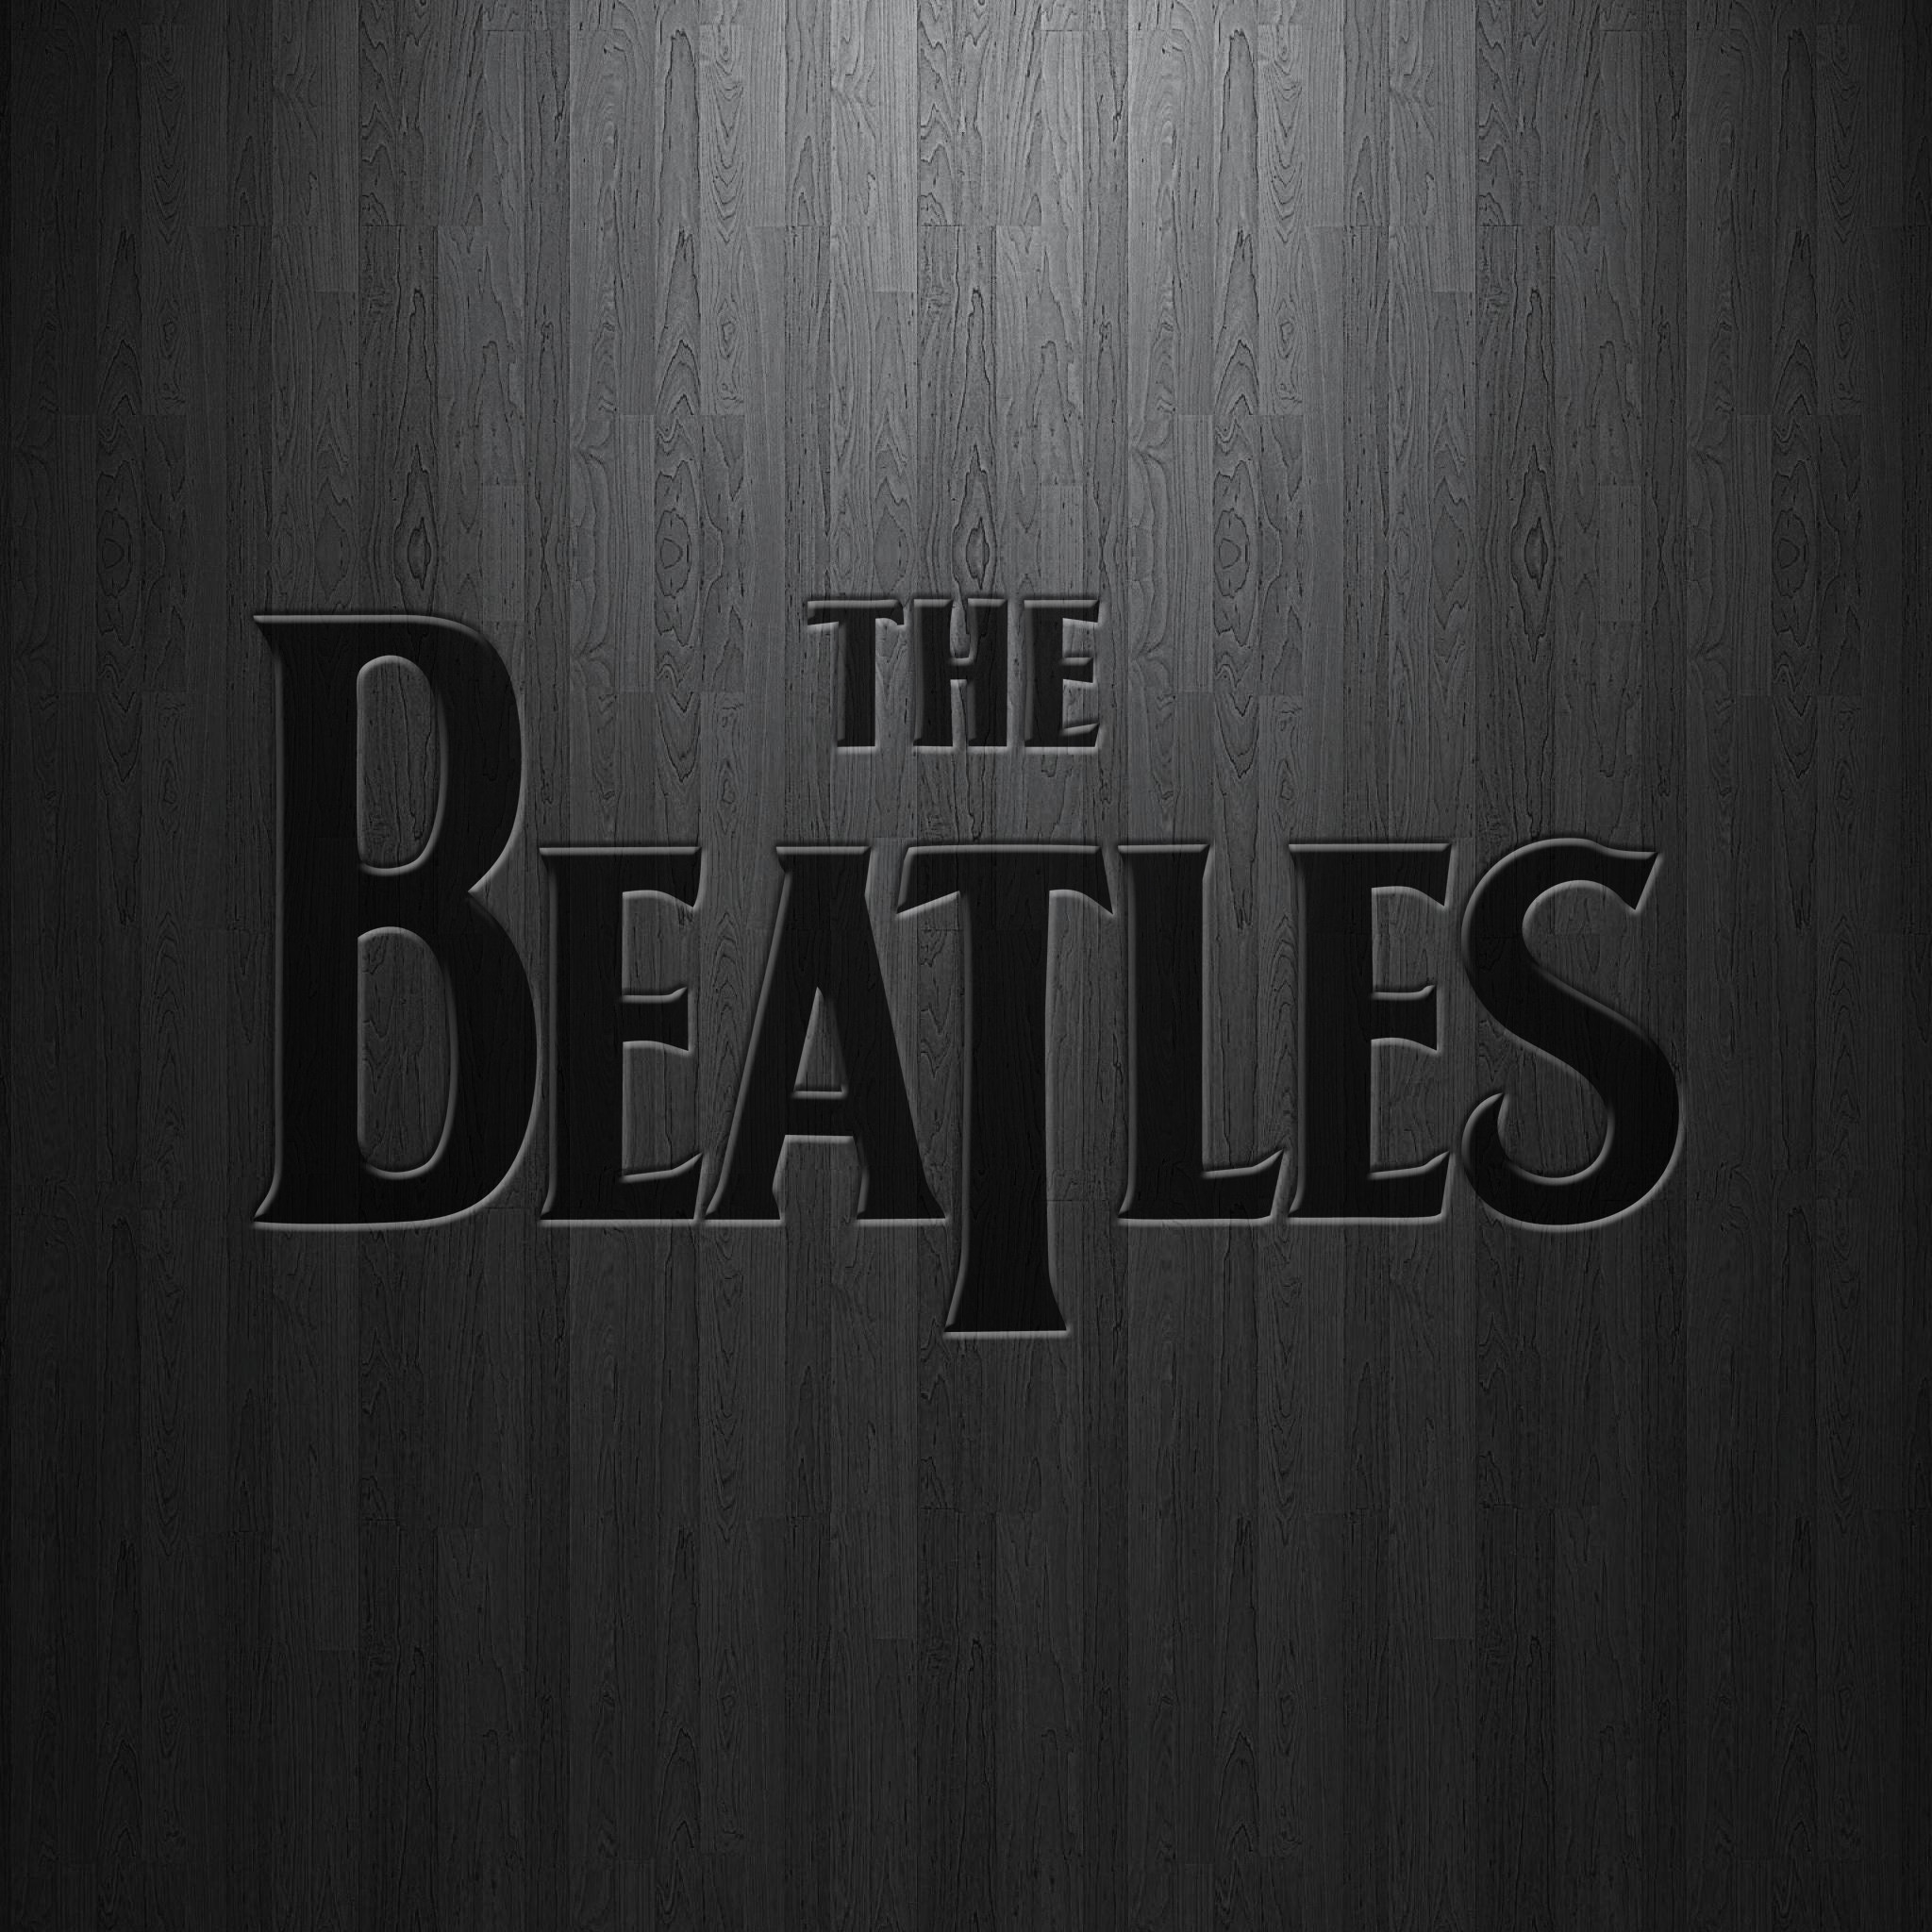 The Beatles Ipad タブレット壁紙ギャラリー